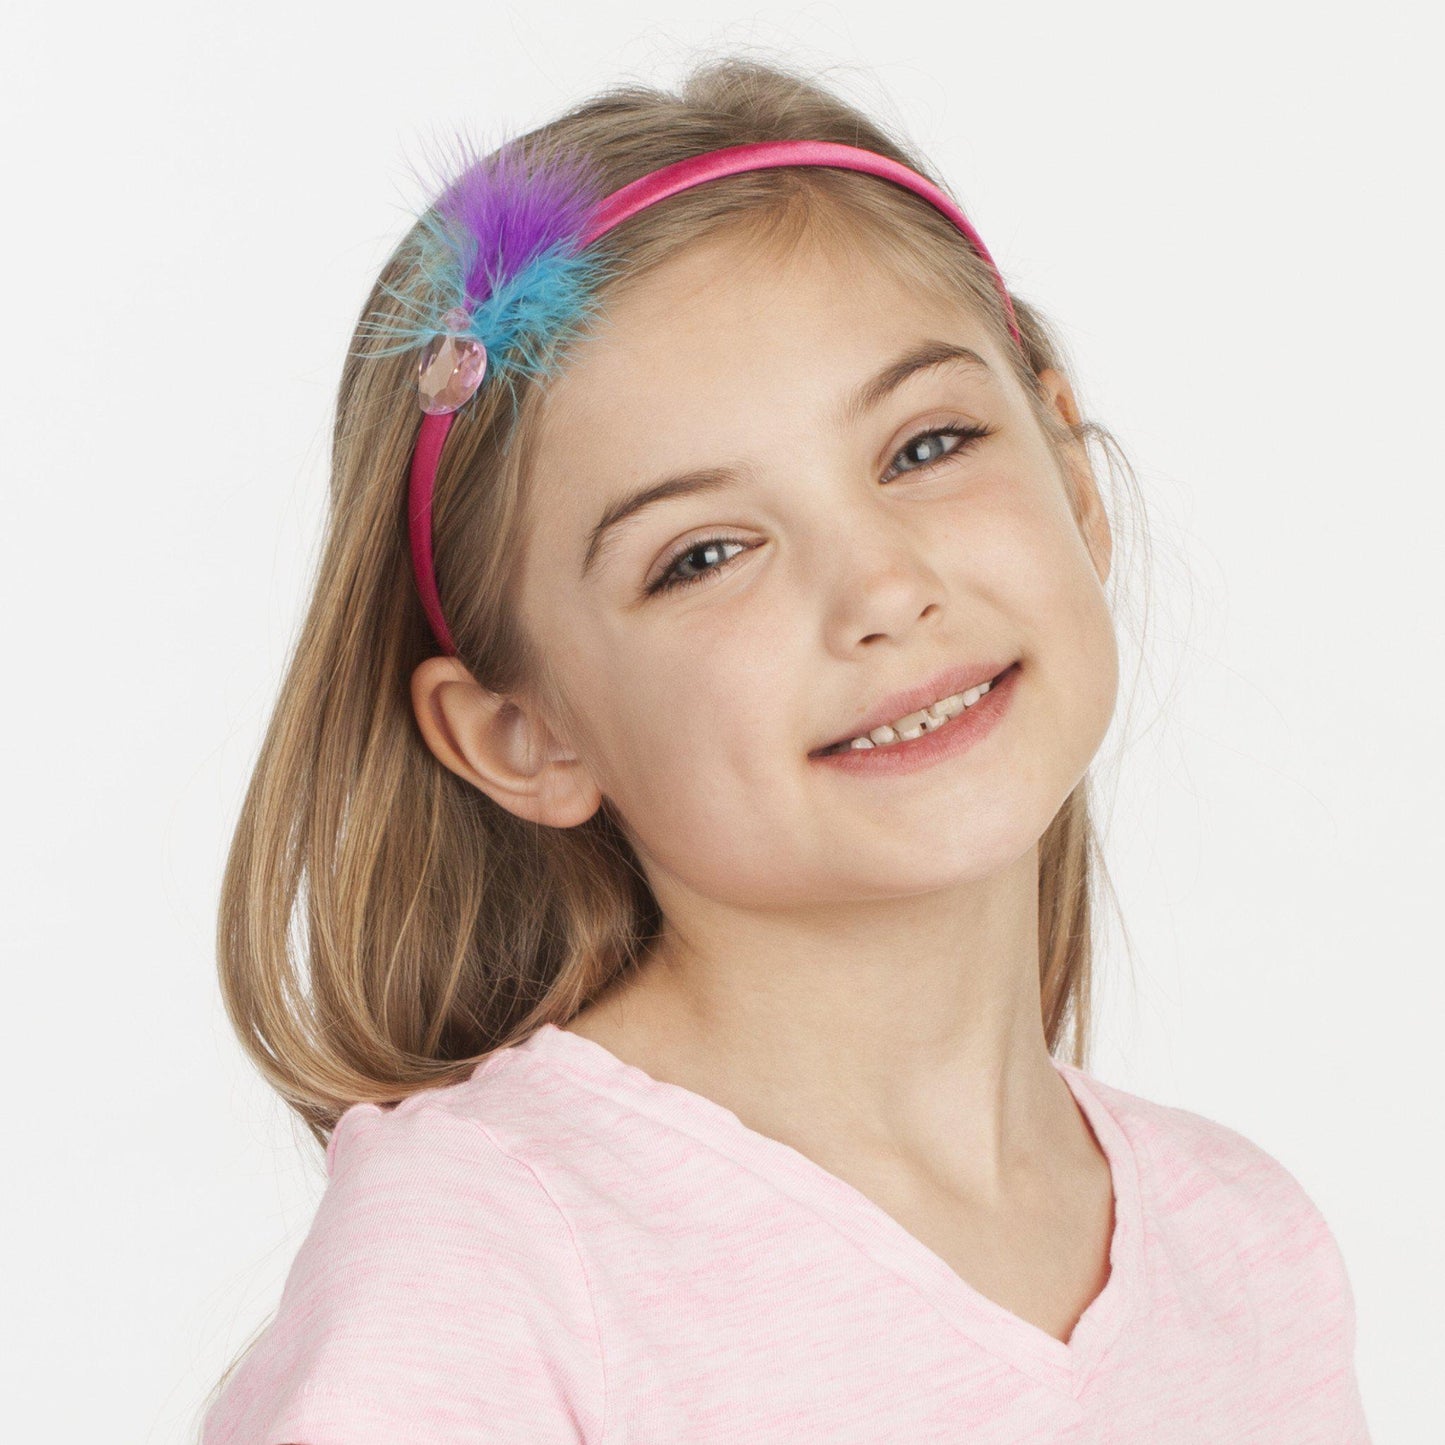 Creativity for Kids Fashion Headbands Mini Craft Kit - Makes 3 DIY Hair Accessories Girls (New Packaging)